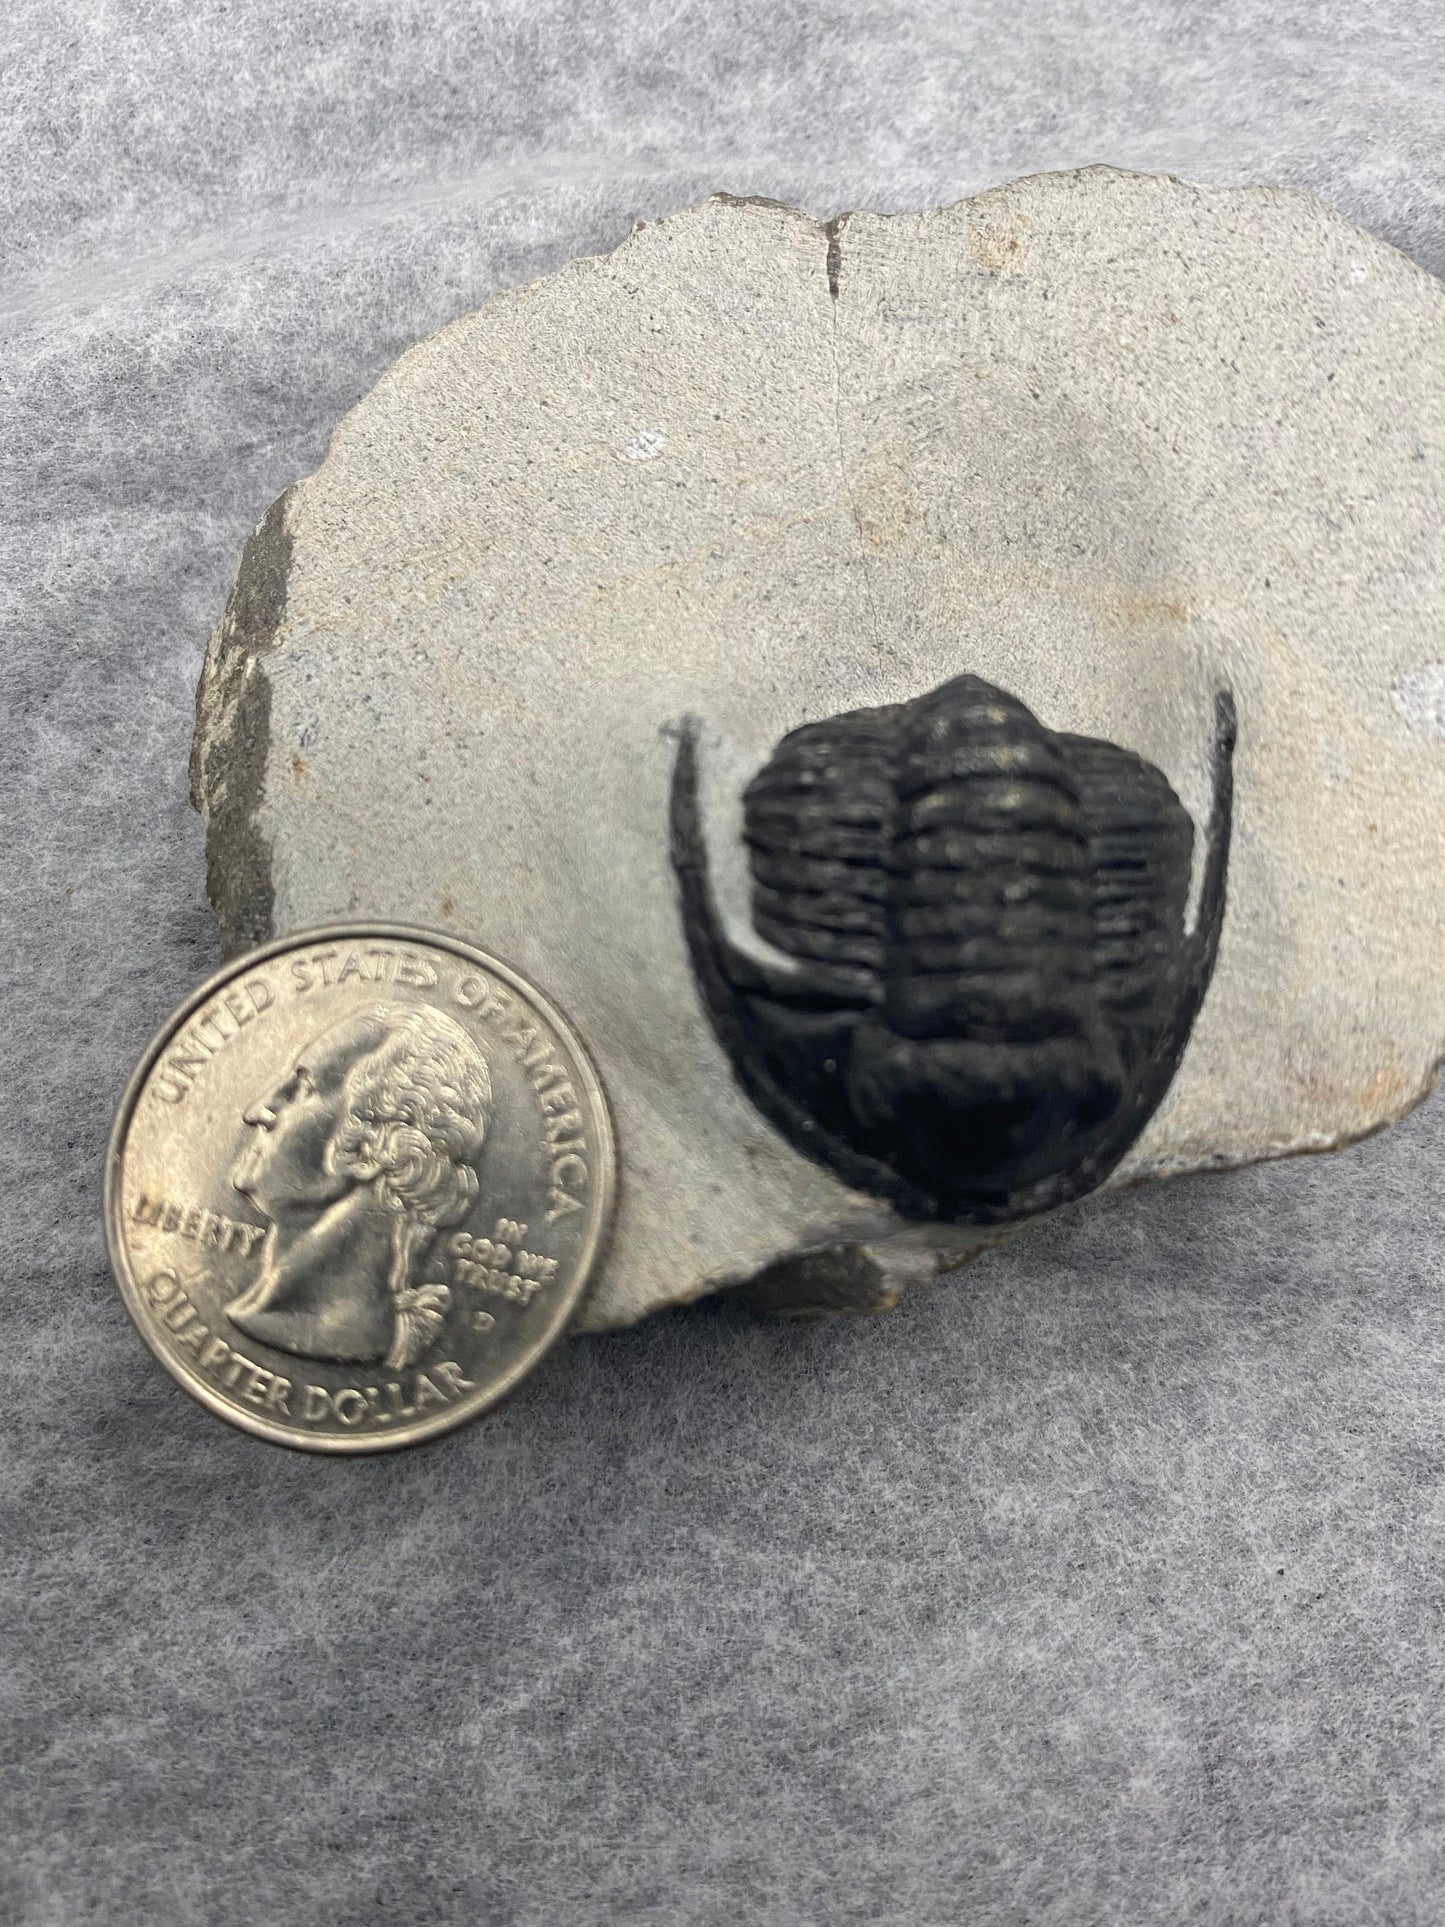 Very nice Dalejeproetus proteus trilobite from Morocco